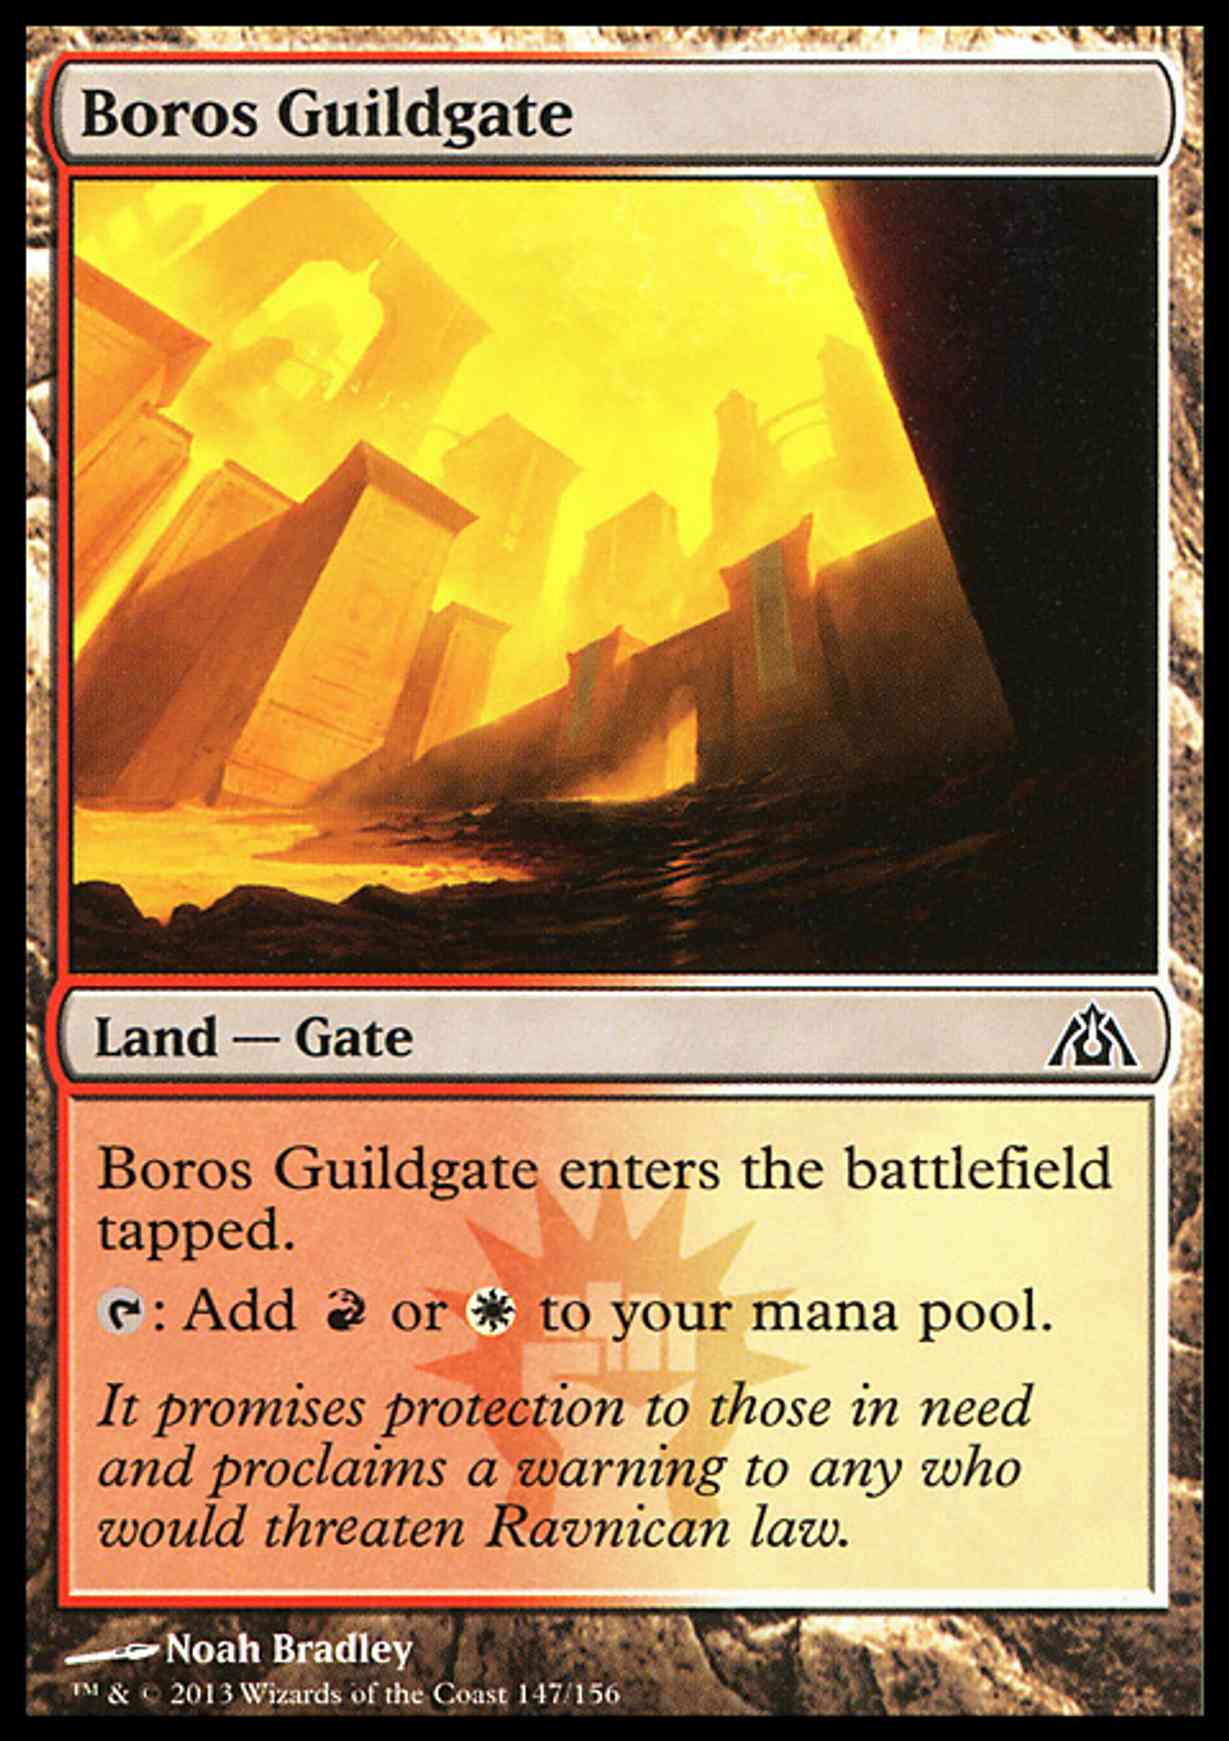 Boros Guildgate magic card front